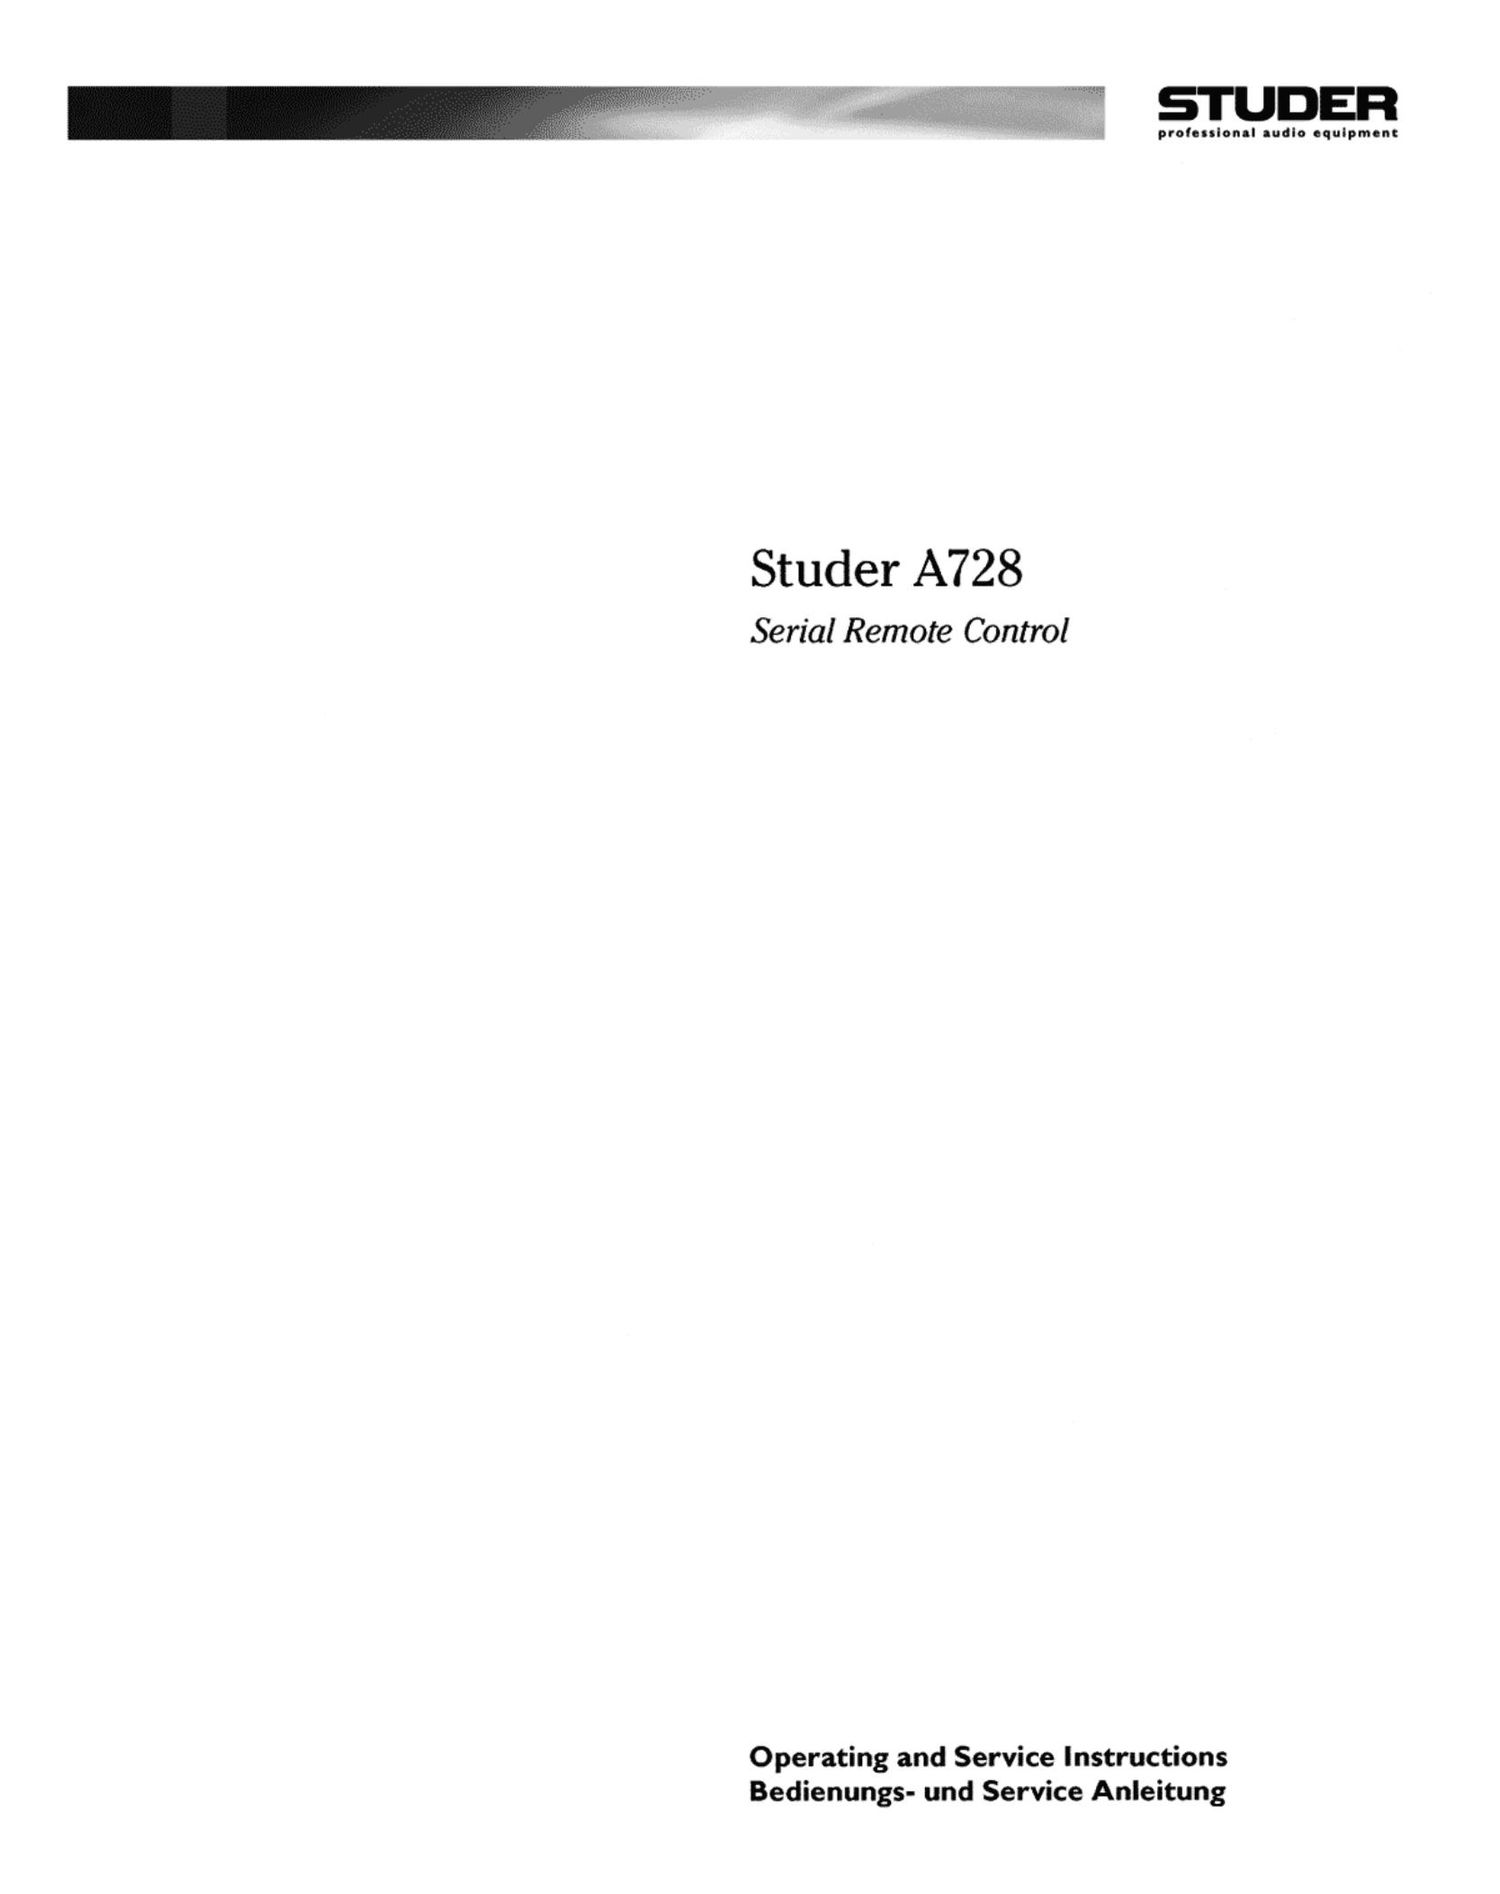 studer a 728 service manual